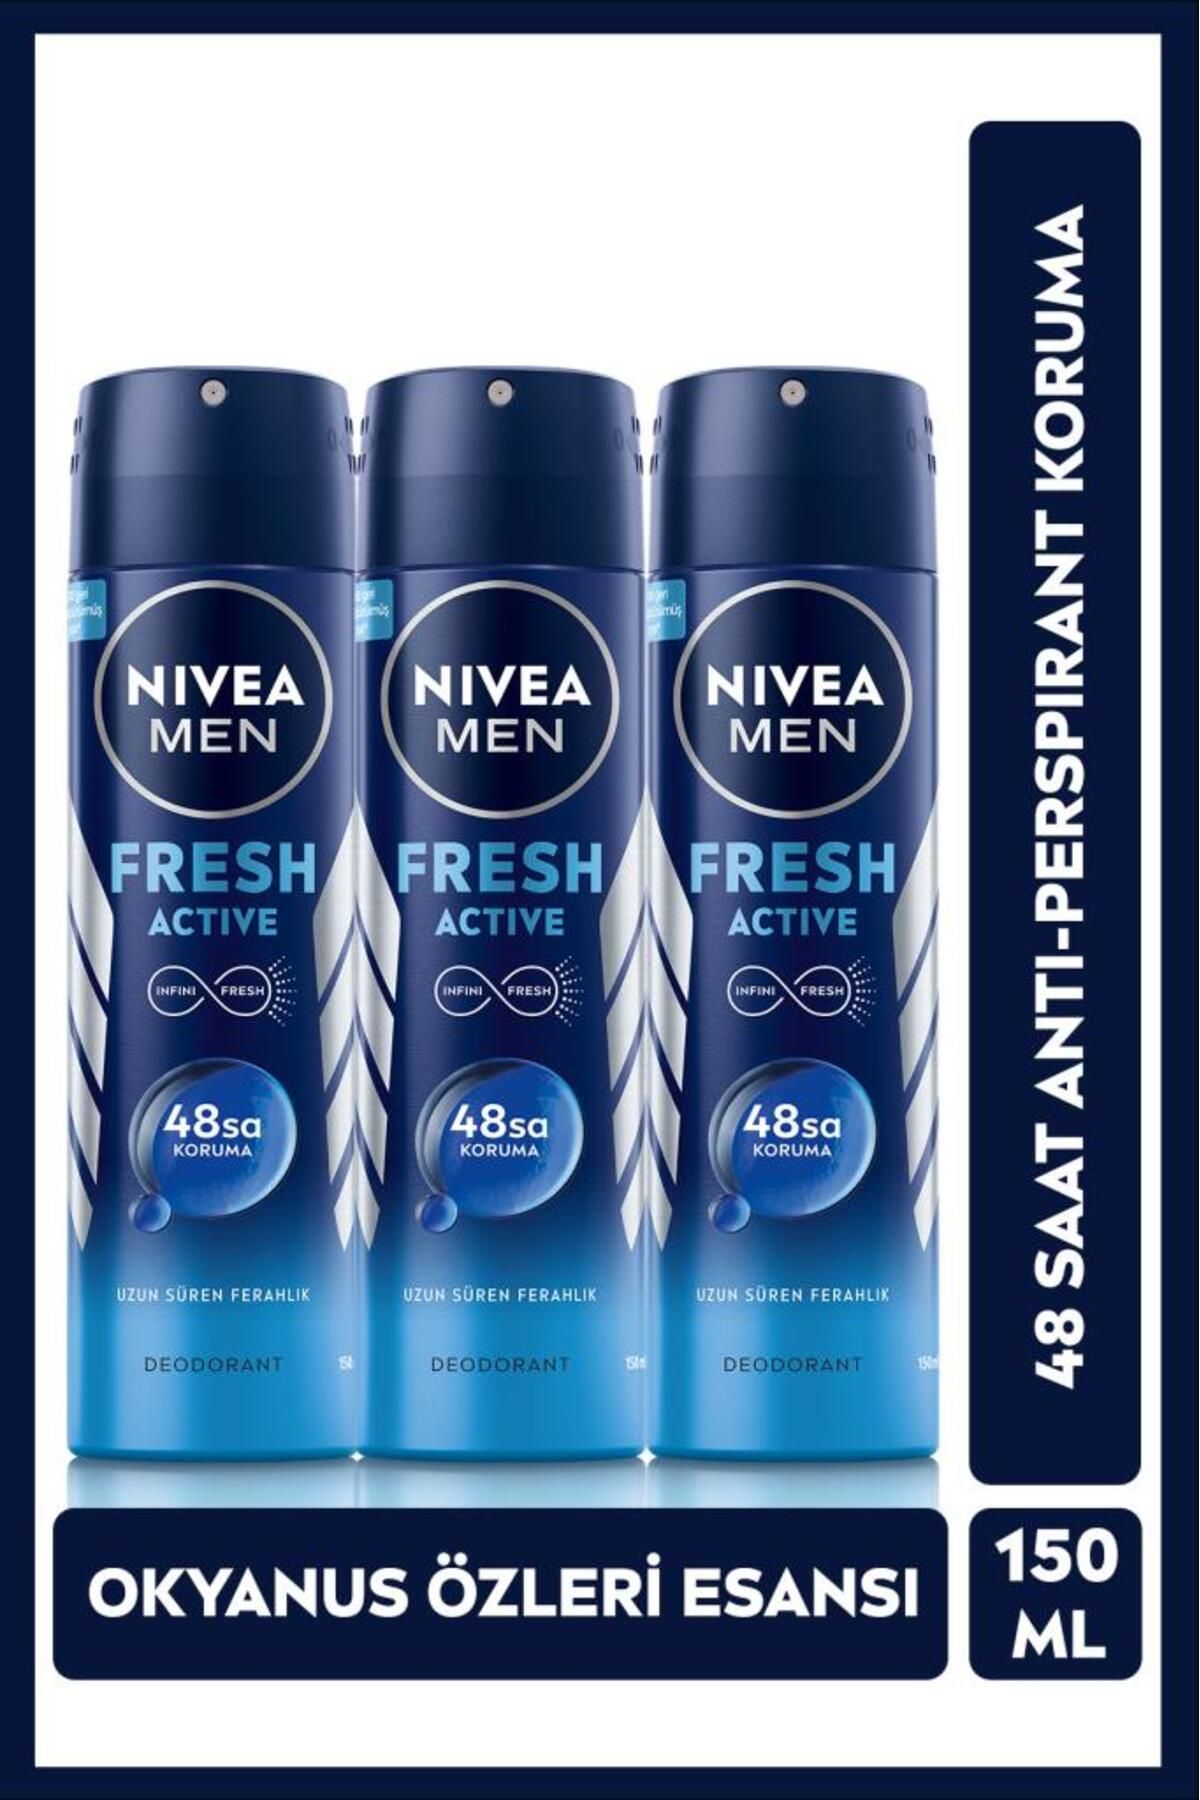 NIVEA Men Fresh Active Deodorant Pudrasız 150 ml X 3 Adet